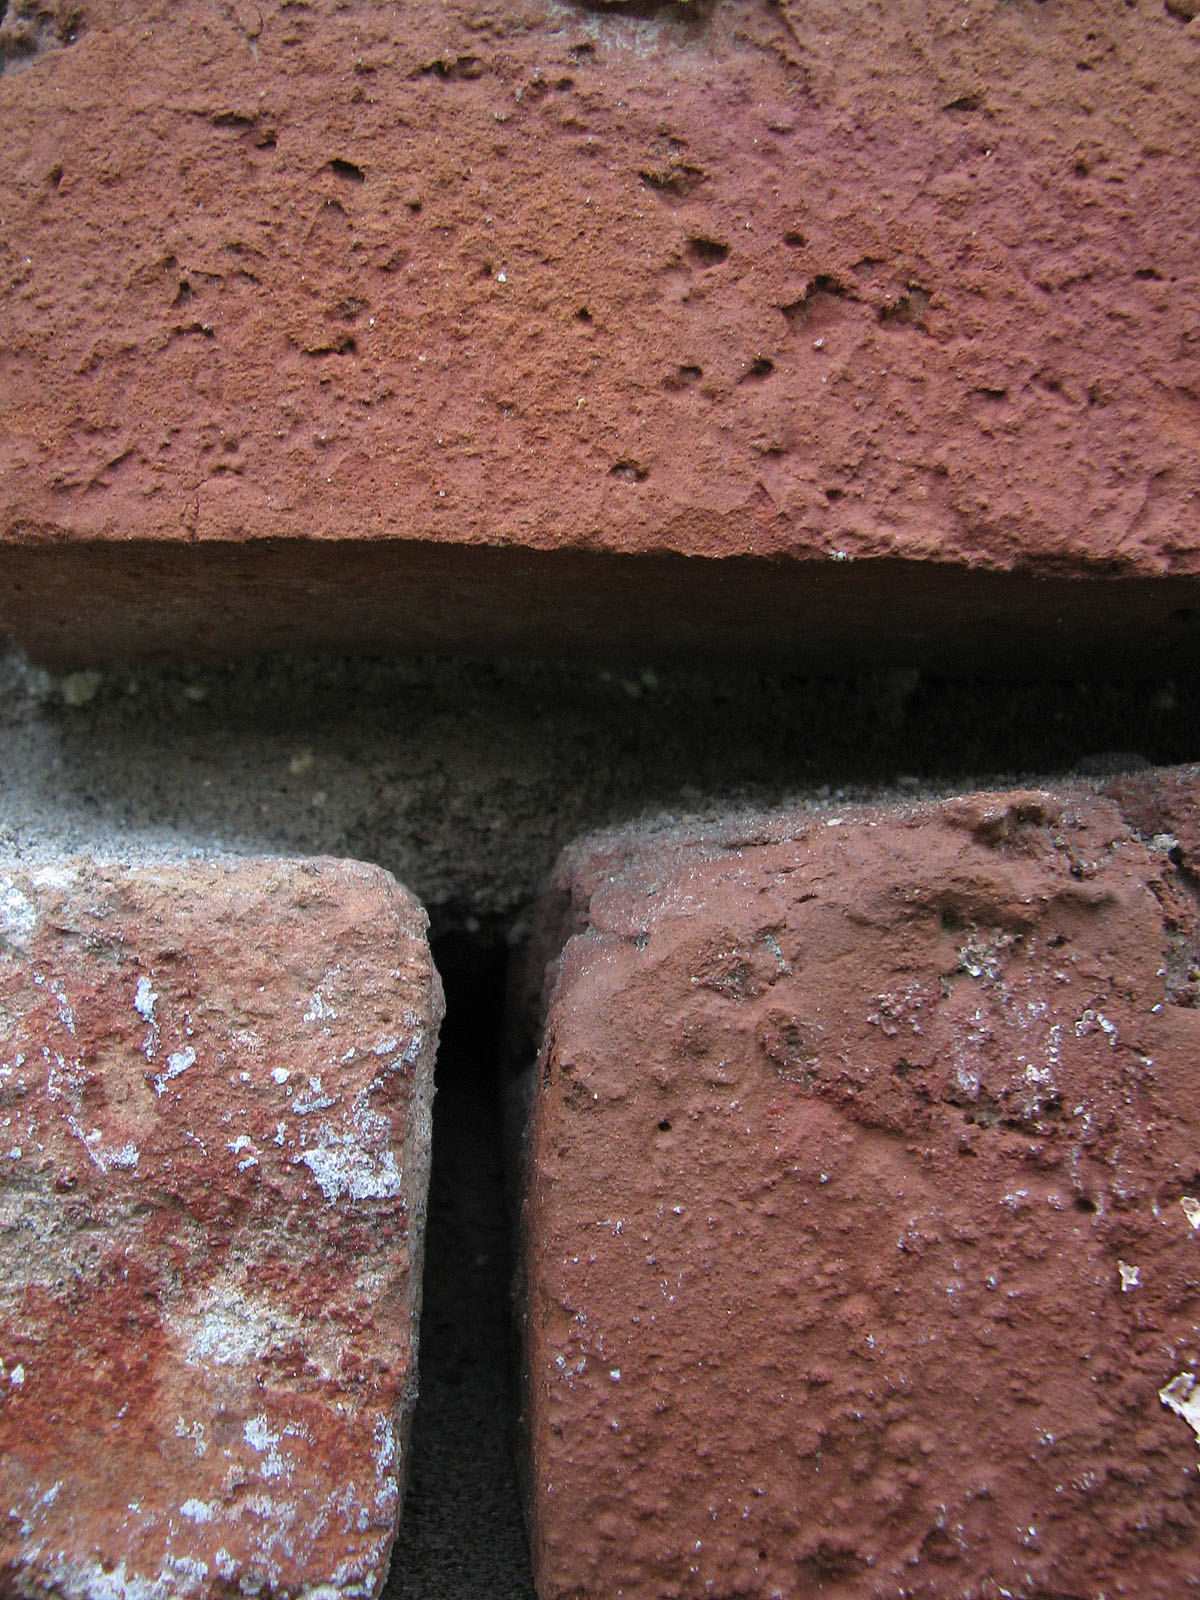 Bricks Closeup by Mish-A-Man